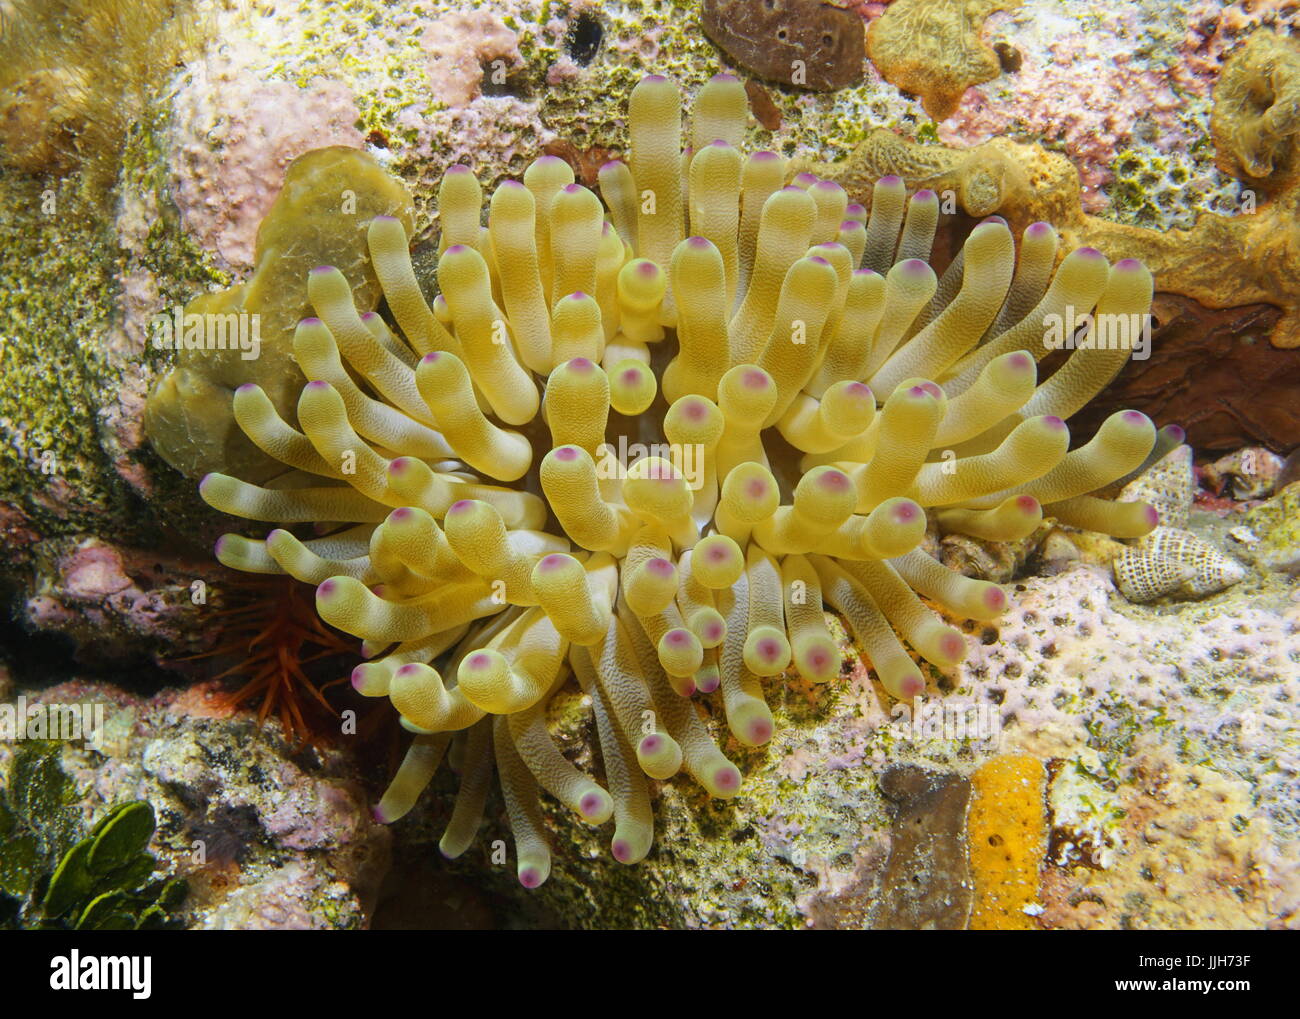 Marine life, a giant Caribbean sea anemone underwater, Condylactis gigantea, Cuba Stock Photo